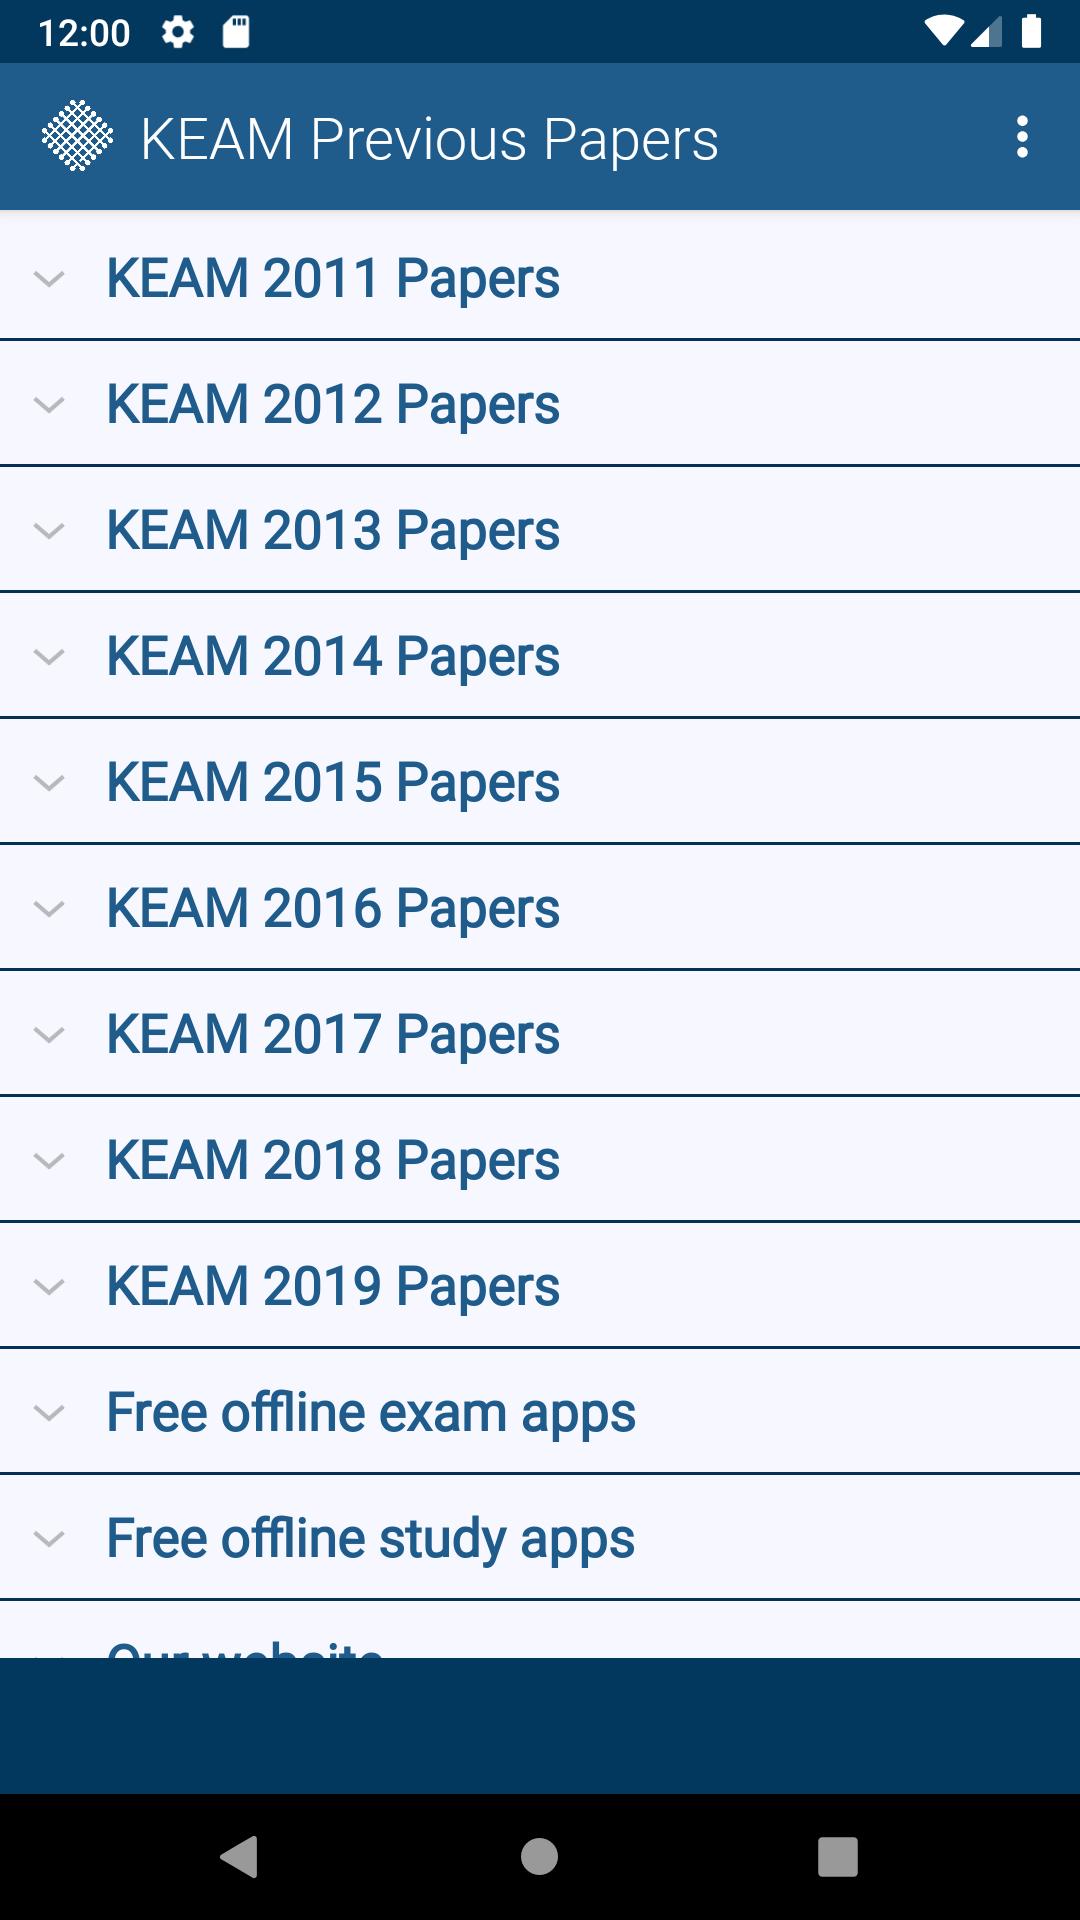 KEAM Previous Papers Free Practice 1.0 Screenshot 1